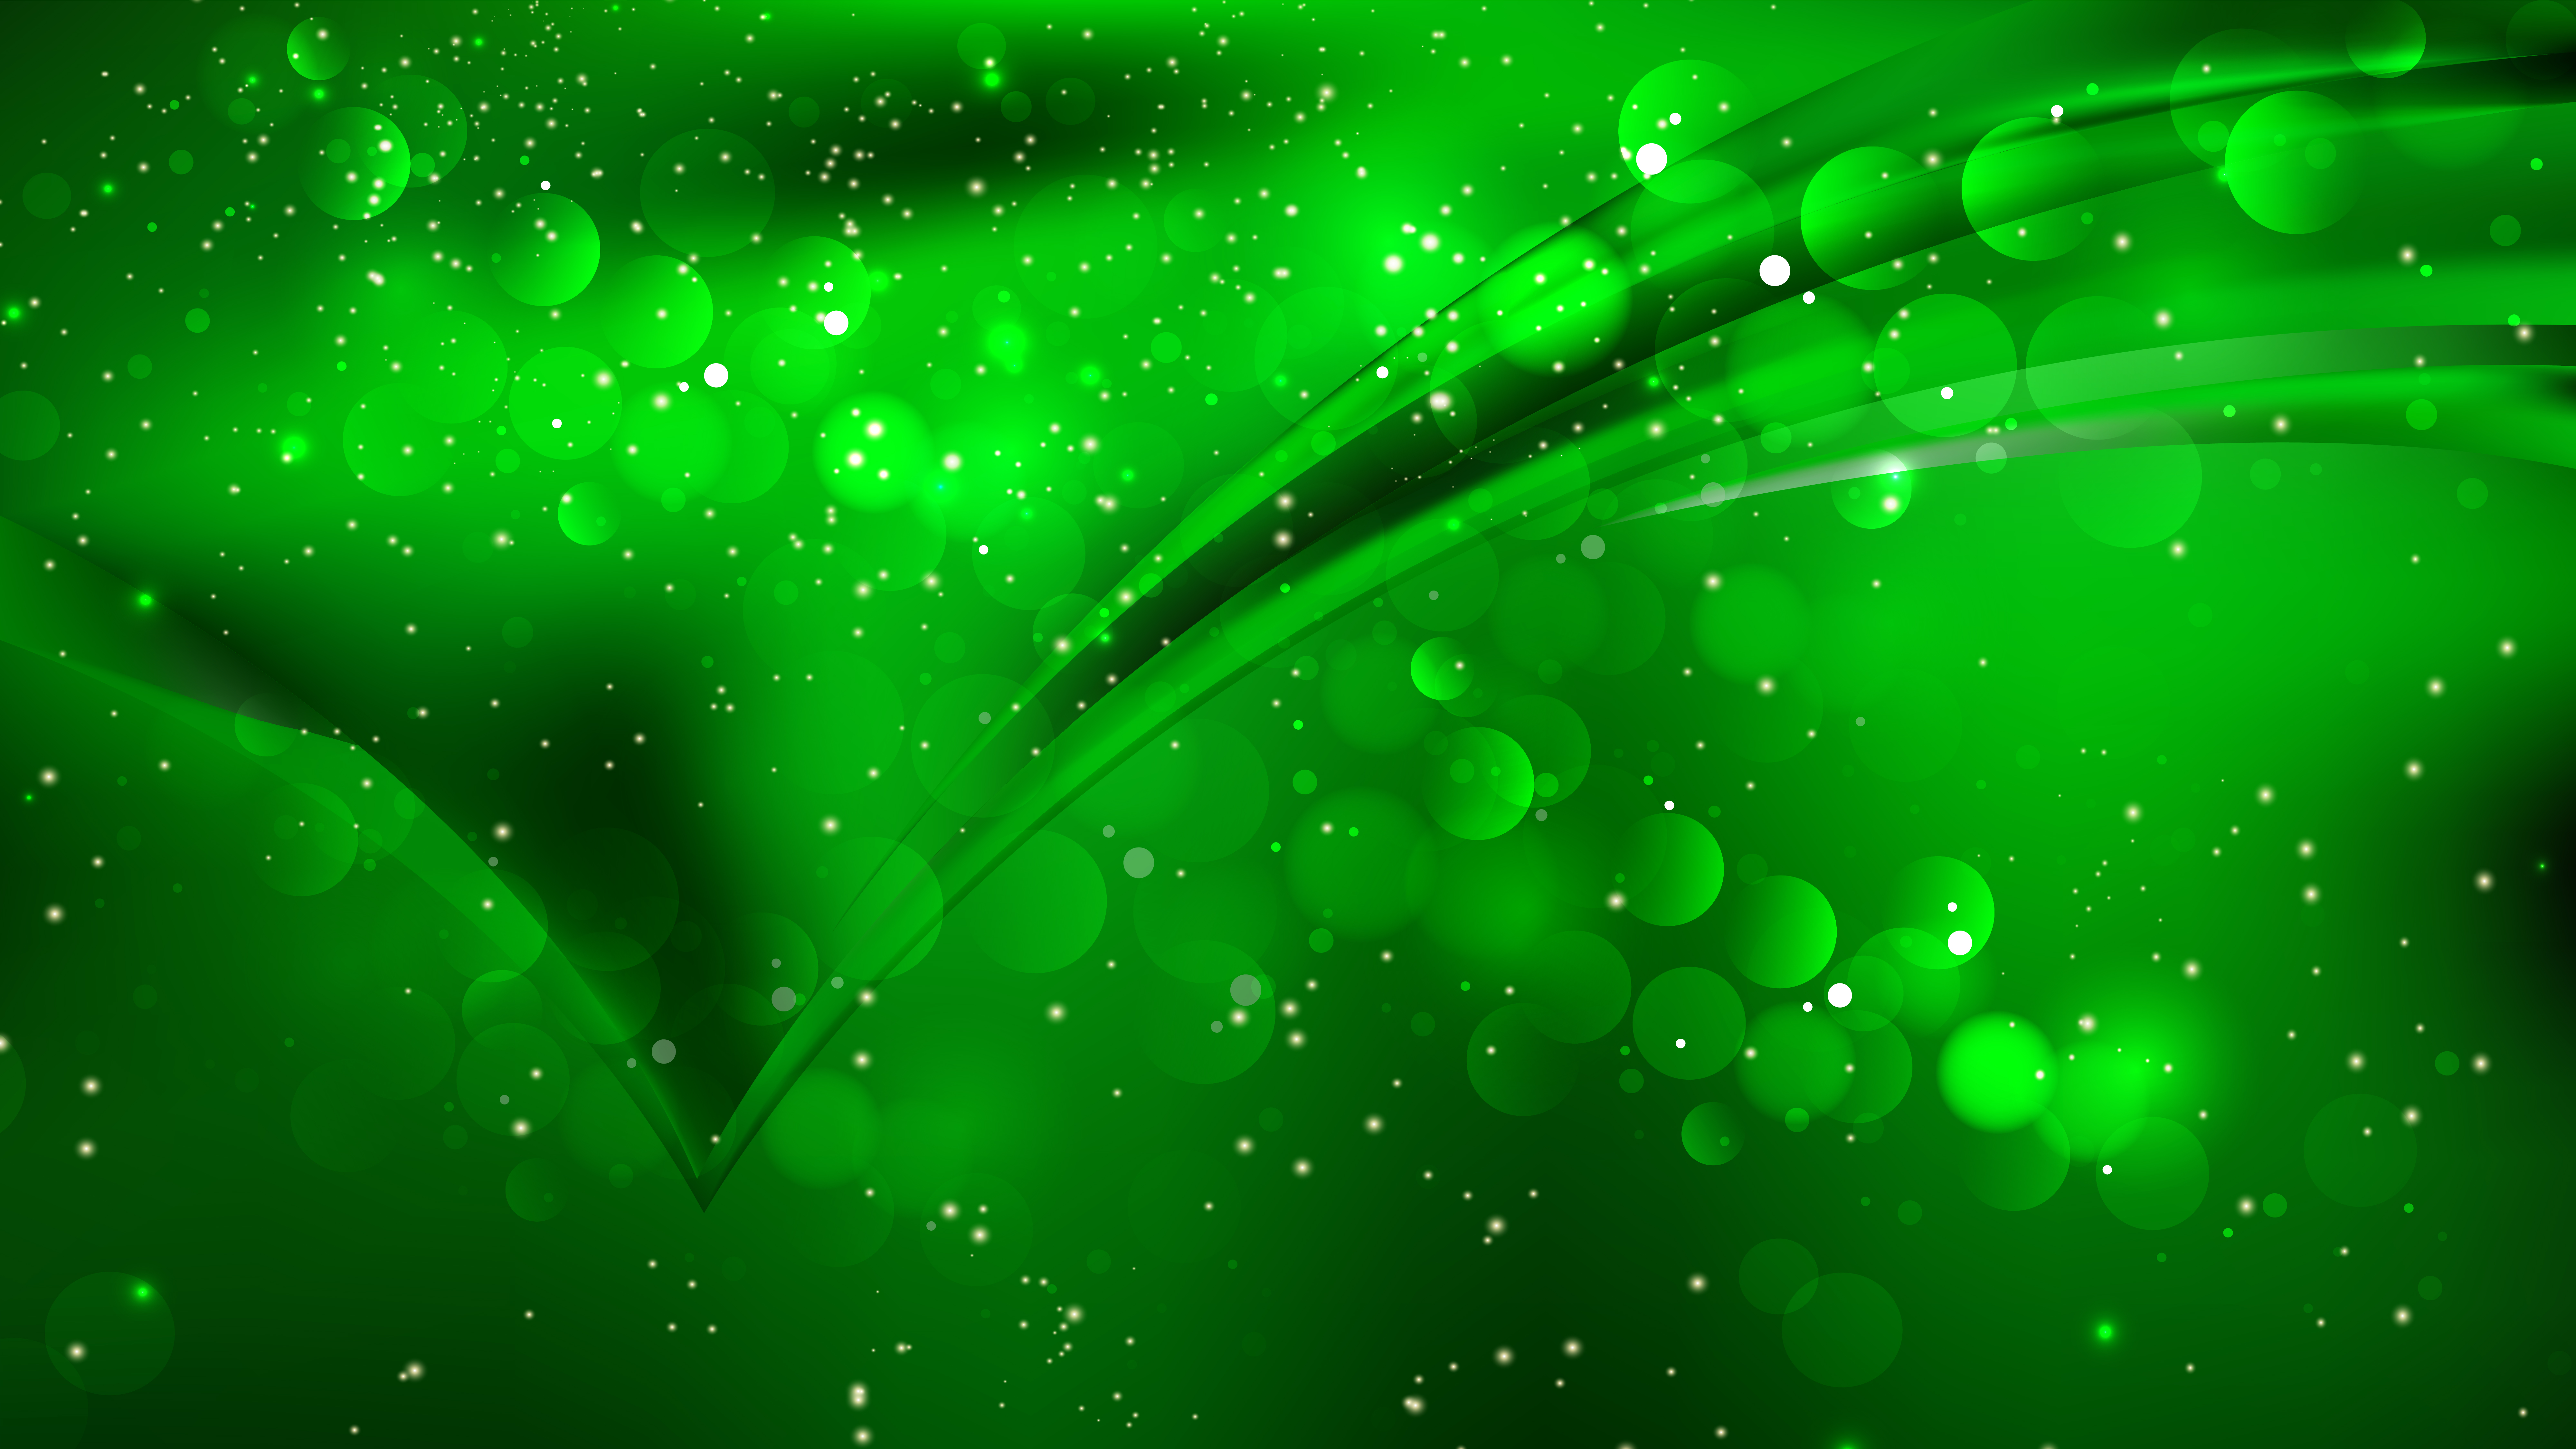 Abstract Dark Green Defocused Background Image